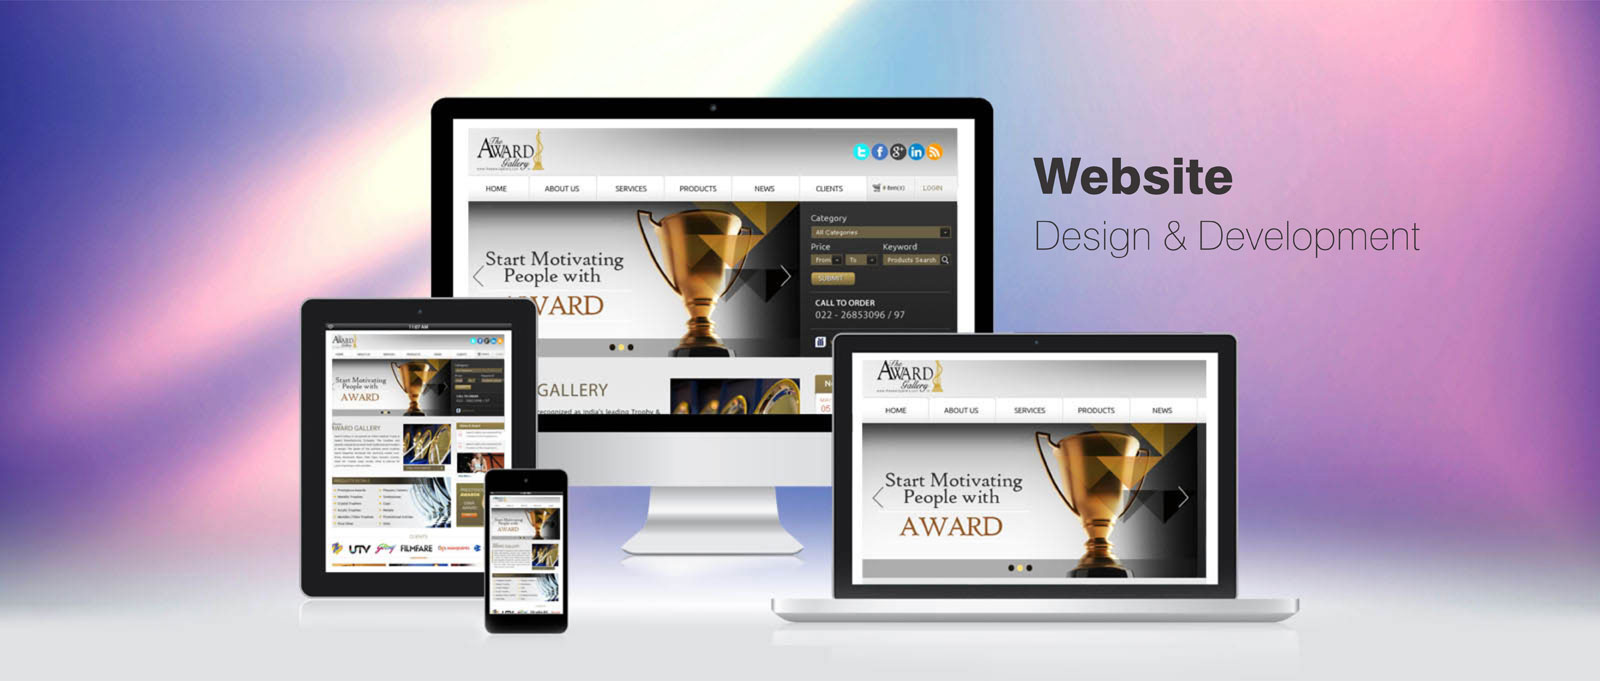 Webiste Designs